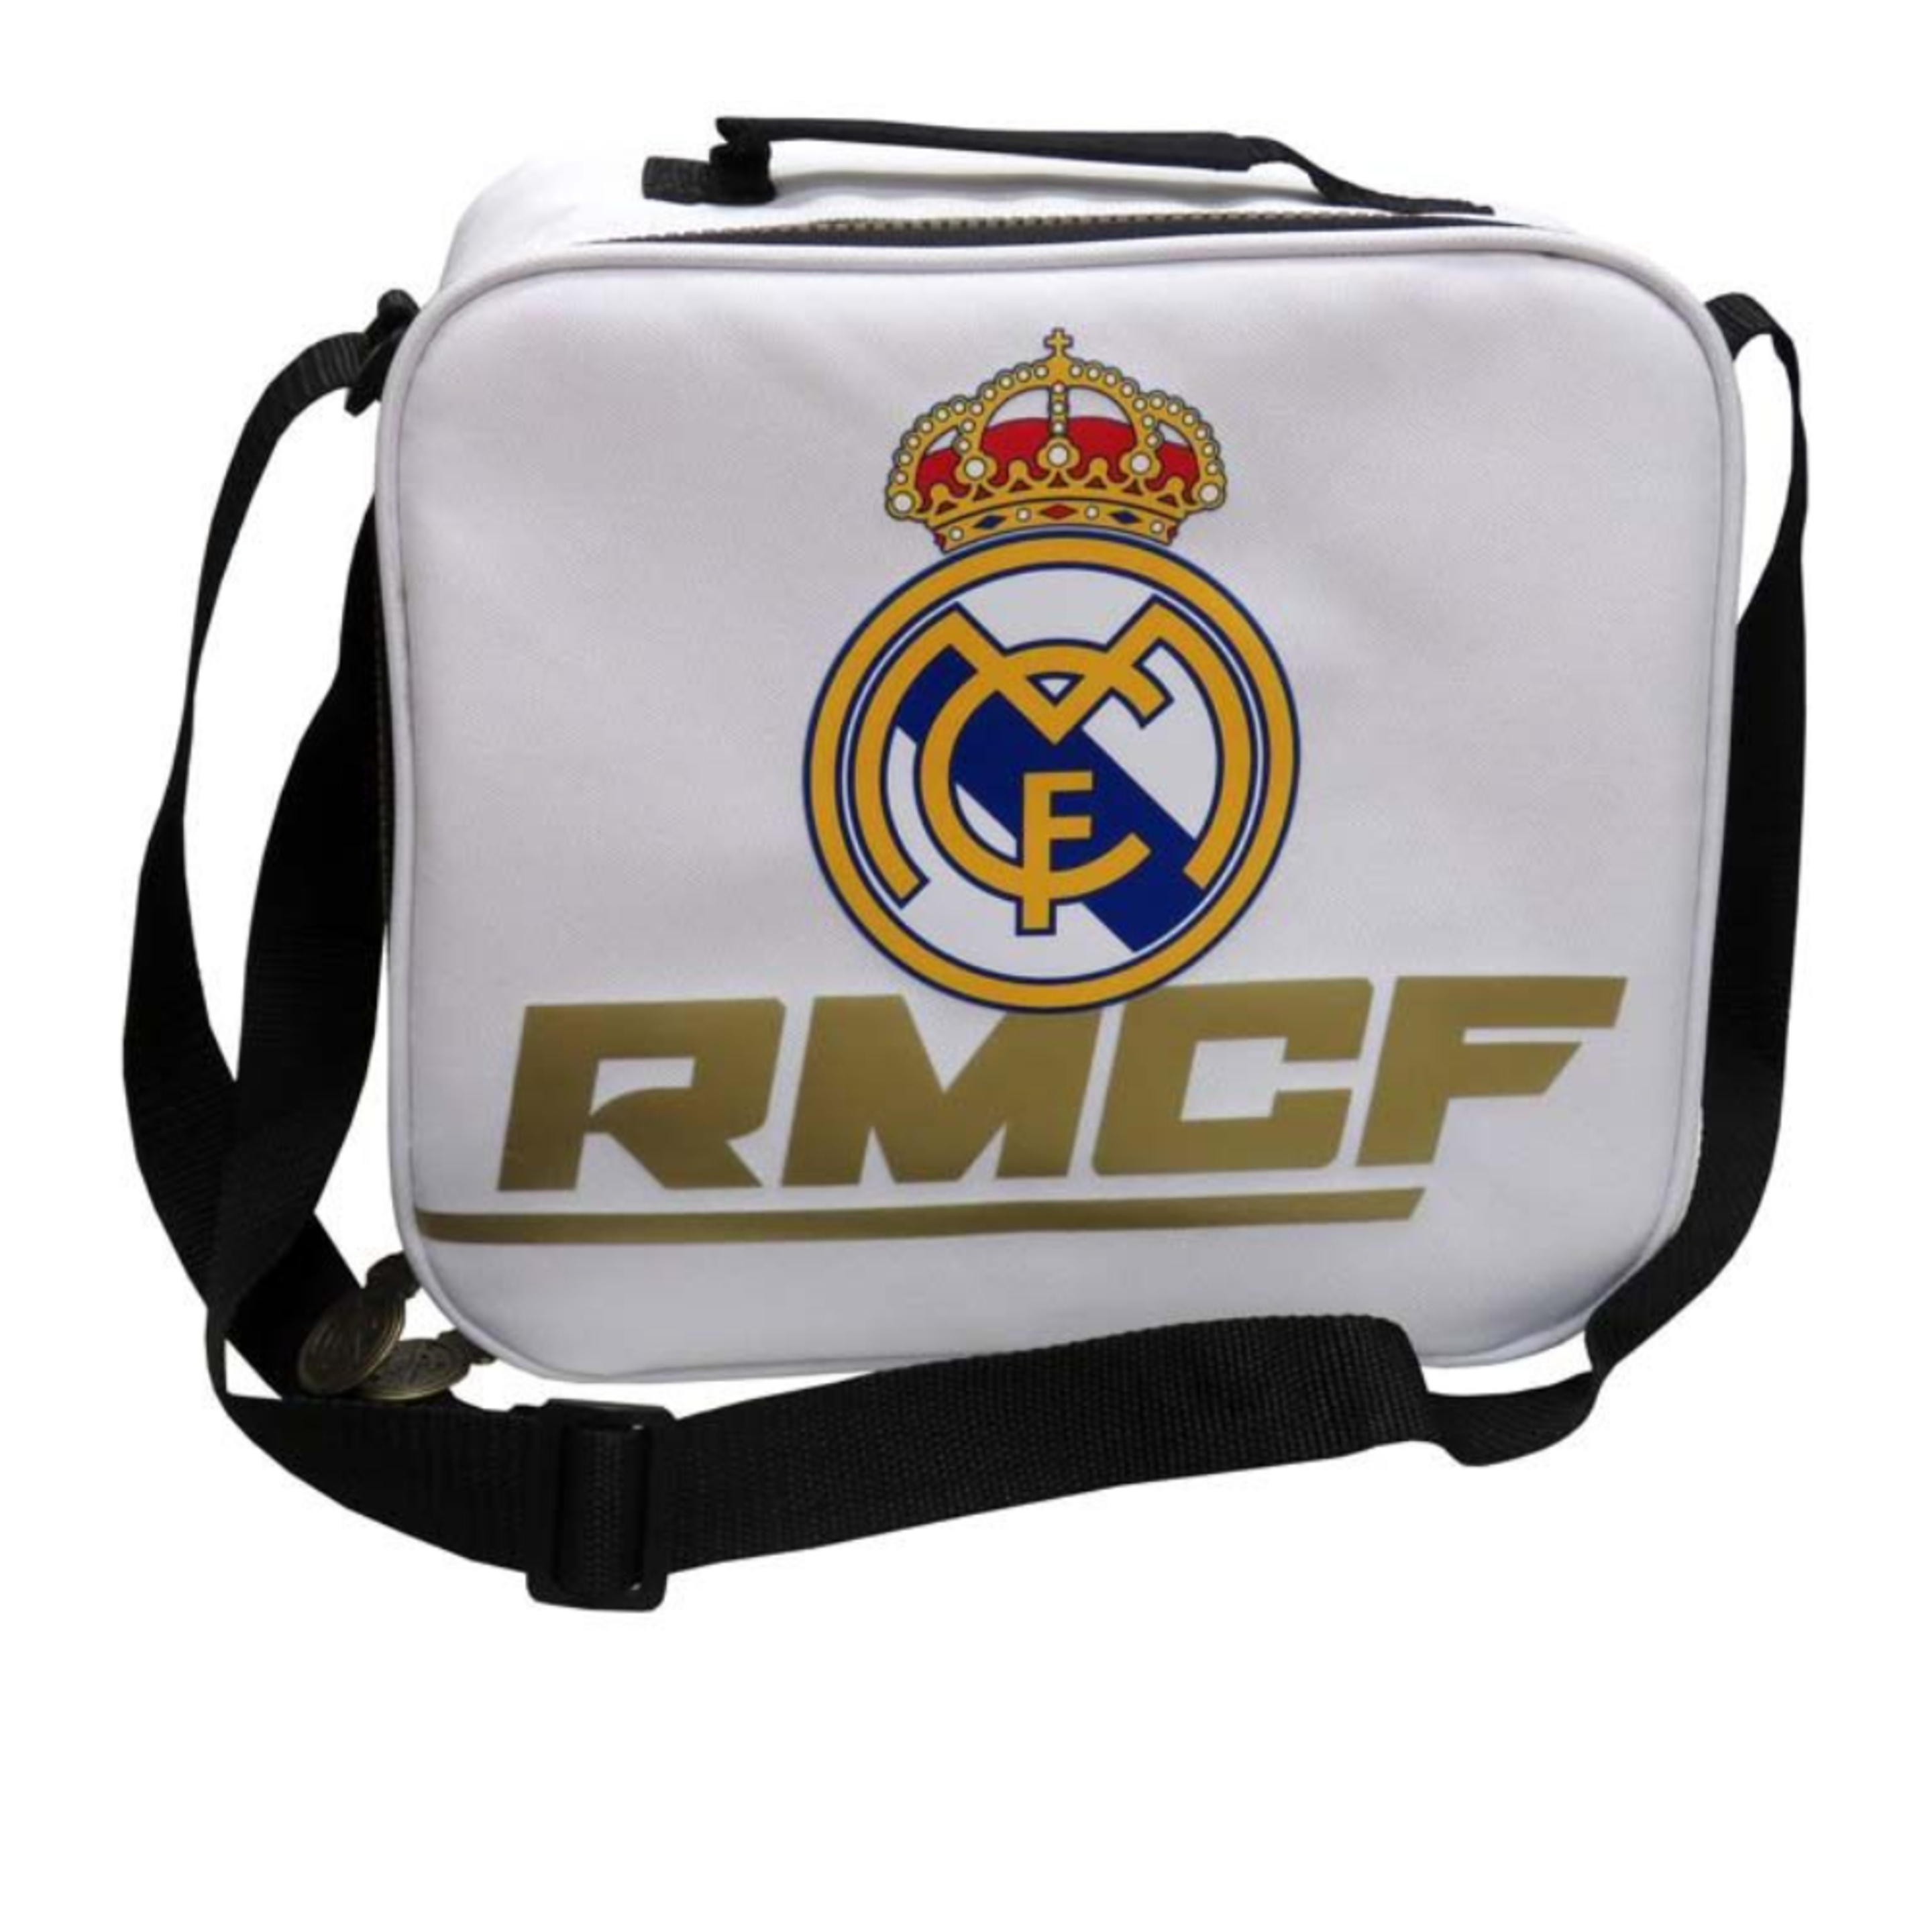 Bolsa Portaalimentos Real Madrid 60177 - blanco - 